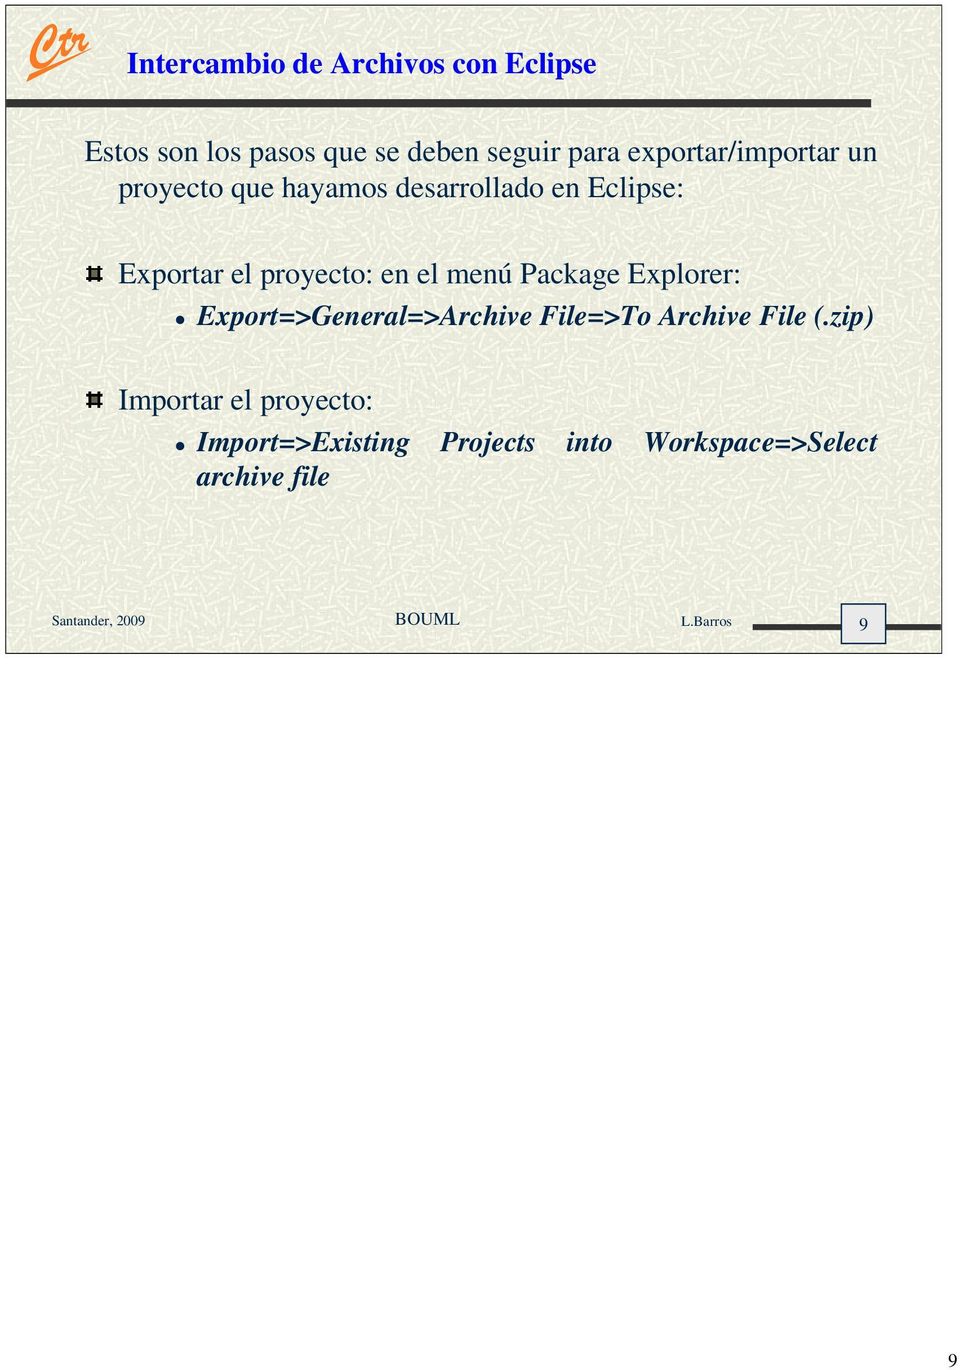 proyecto: en el menú Package Explorer: Export=>General=>Archive File=>To Archive